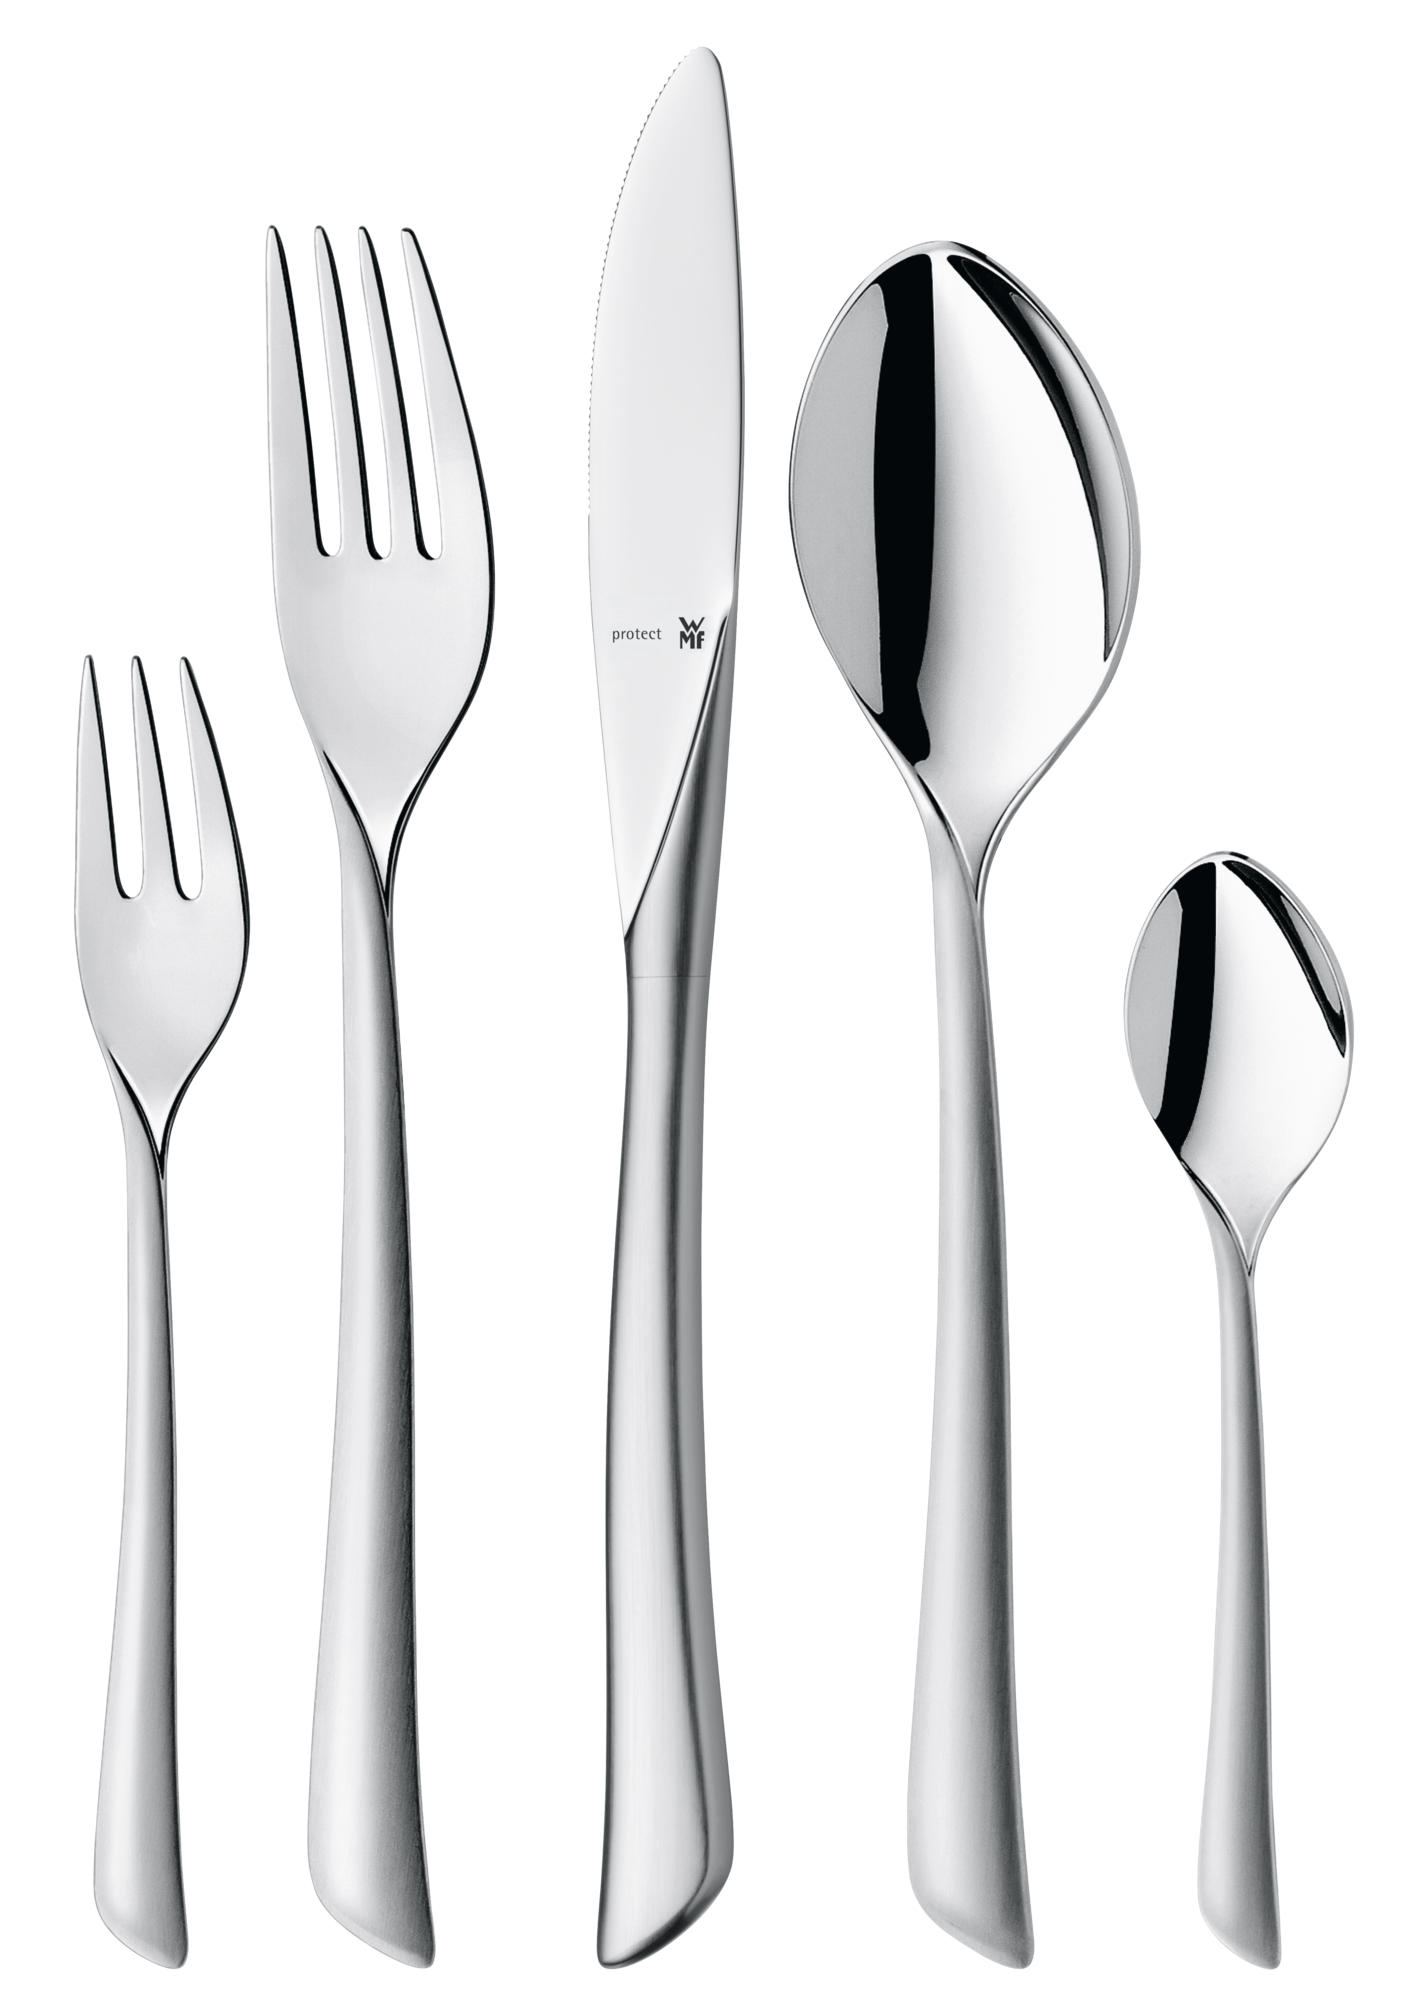 Cutlery Set Virginia, Cromargan protect®, 66-piece